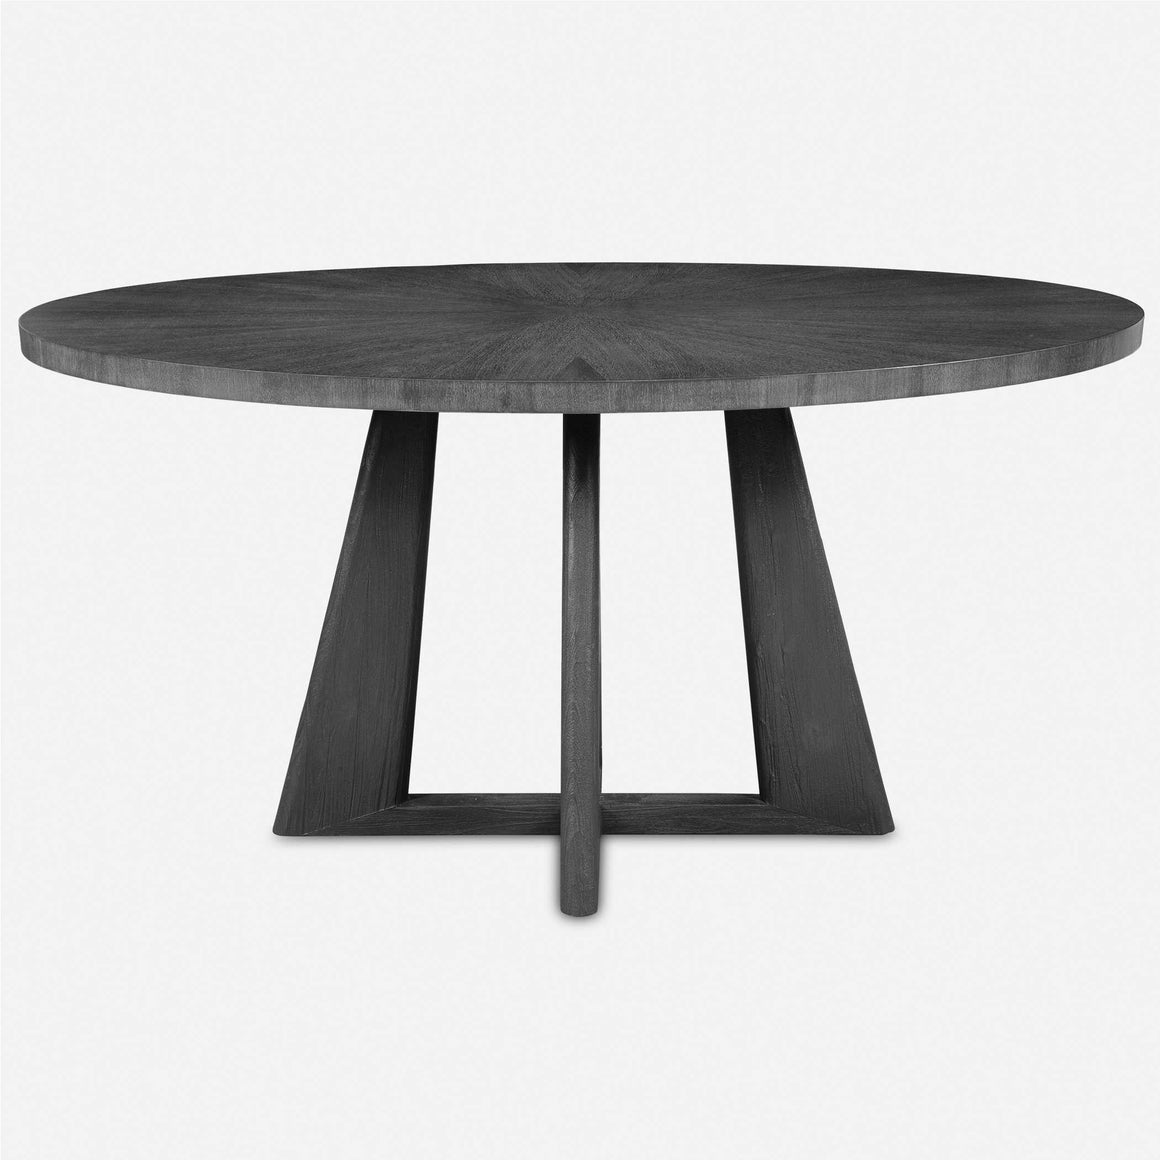 Pulsar Contemporary Dining Table @taylorraydesign